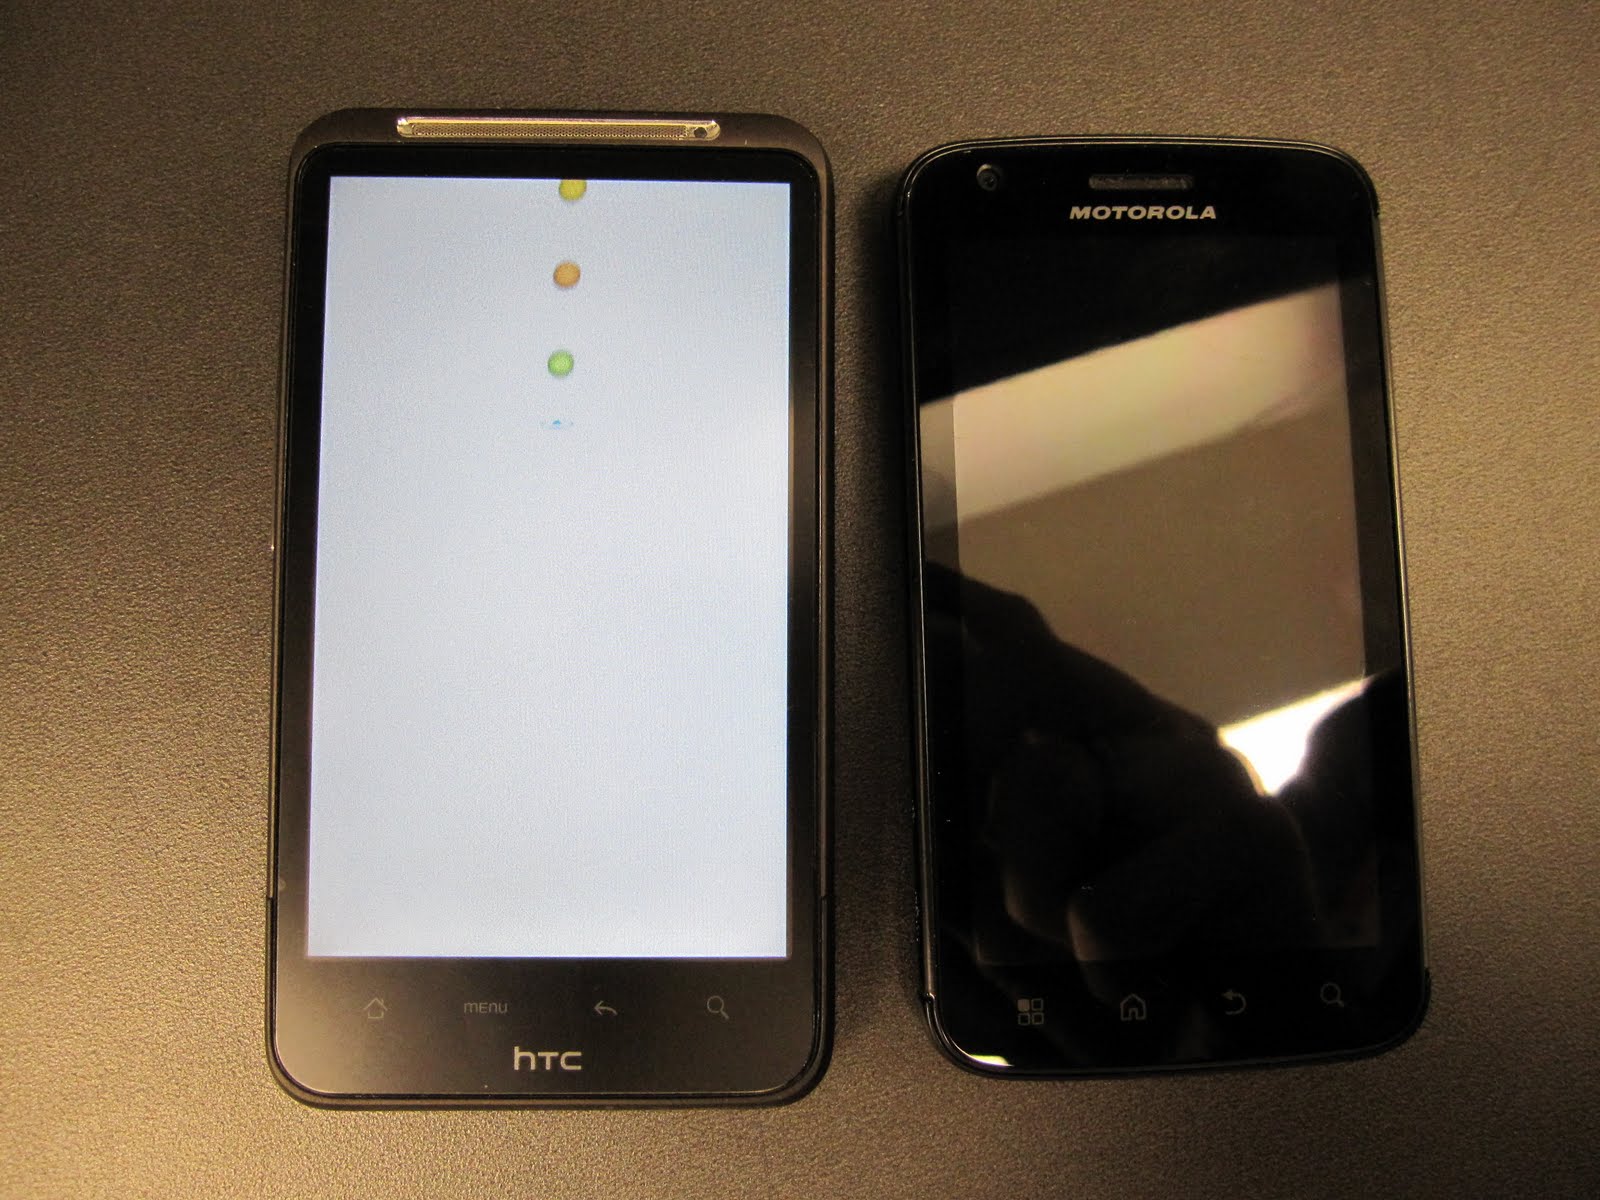 HTC Inspire next to the Motorola Atrix for size comparison.